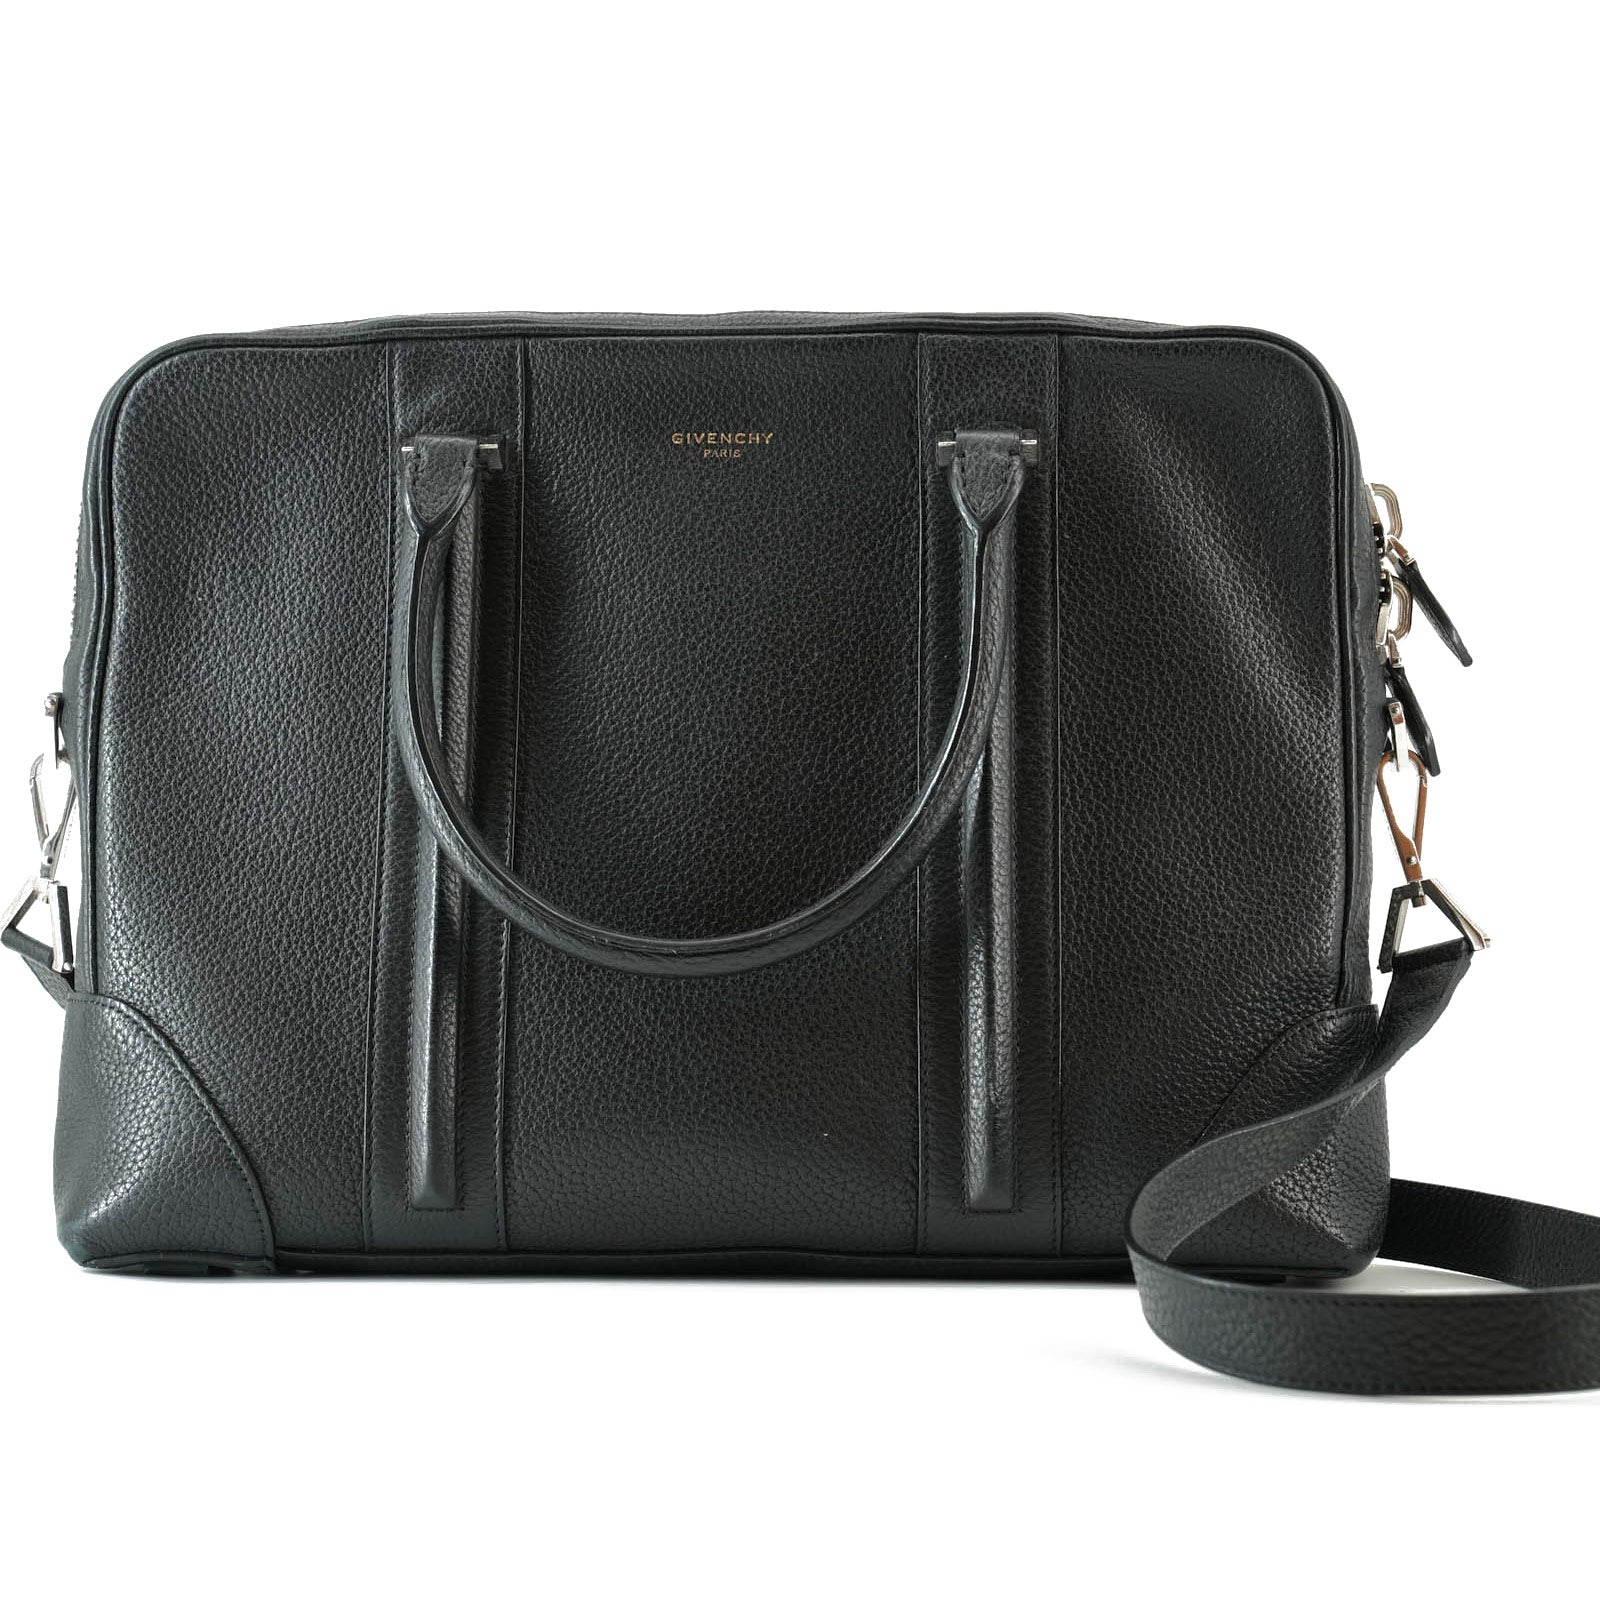 Givenchy Laptop Bag